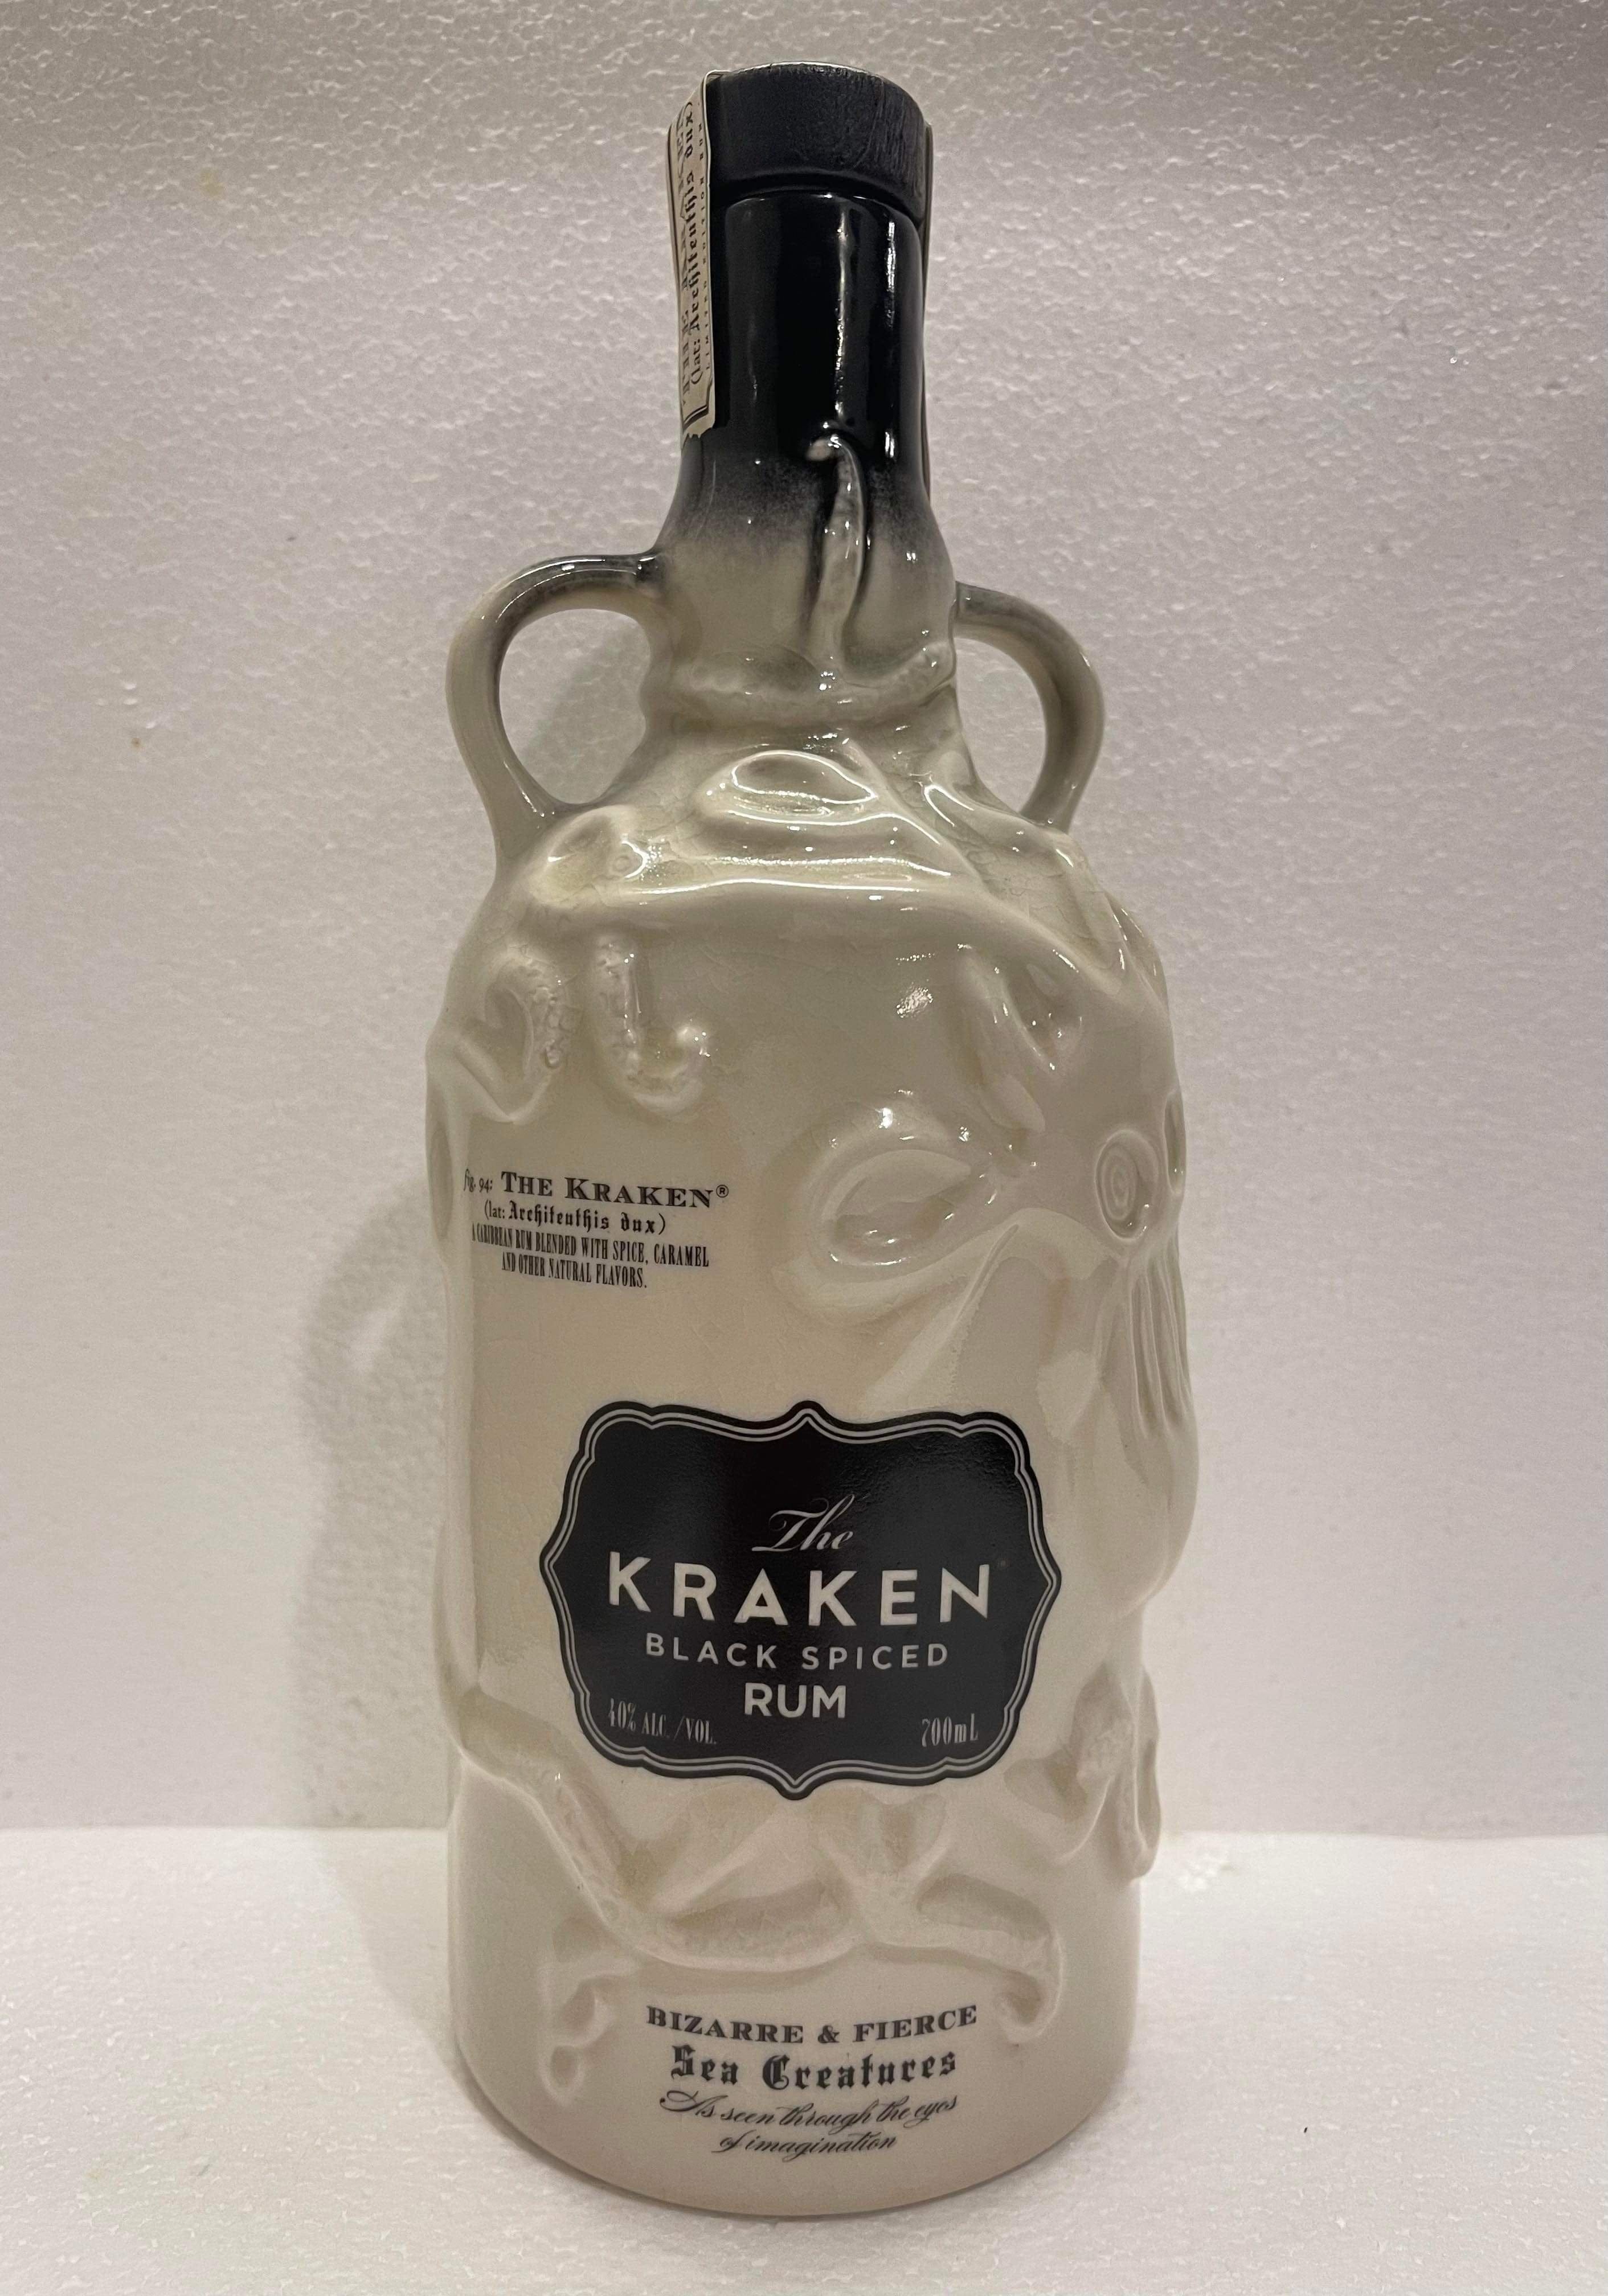 Kraken Limited Edition White Ceramic Spiced Rum - First Edition 2015